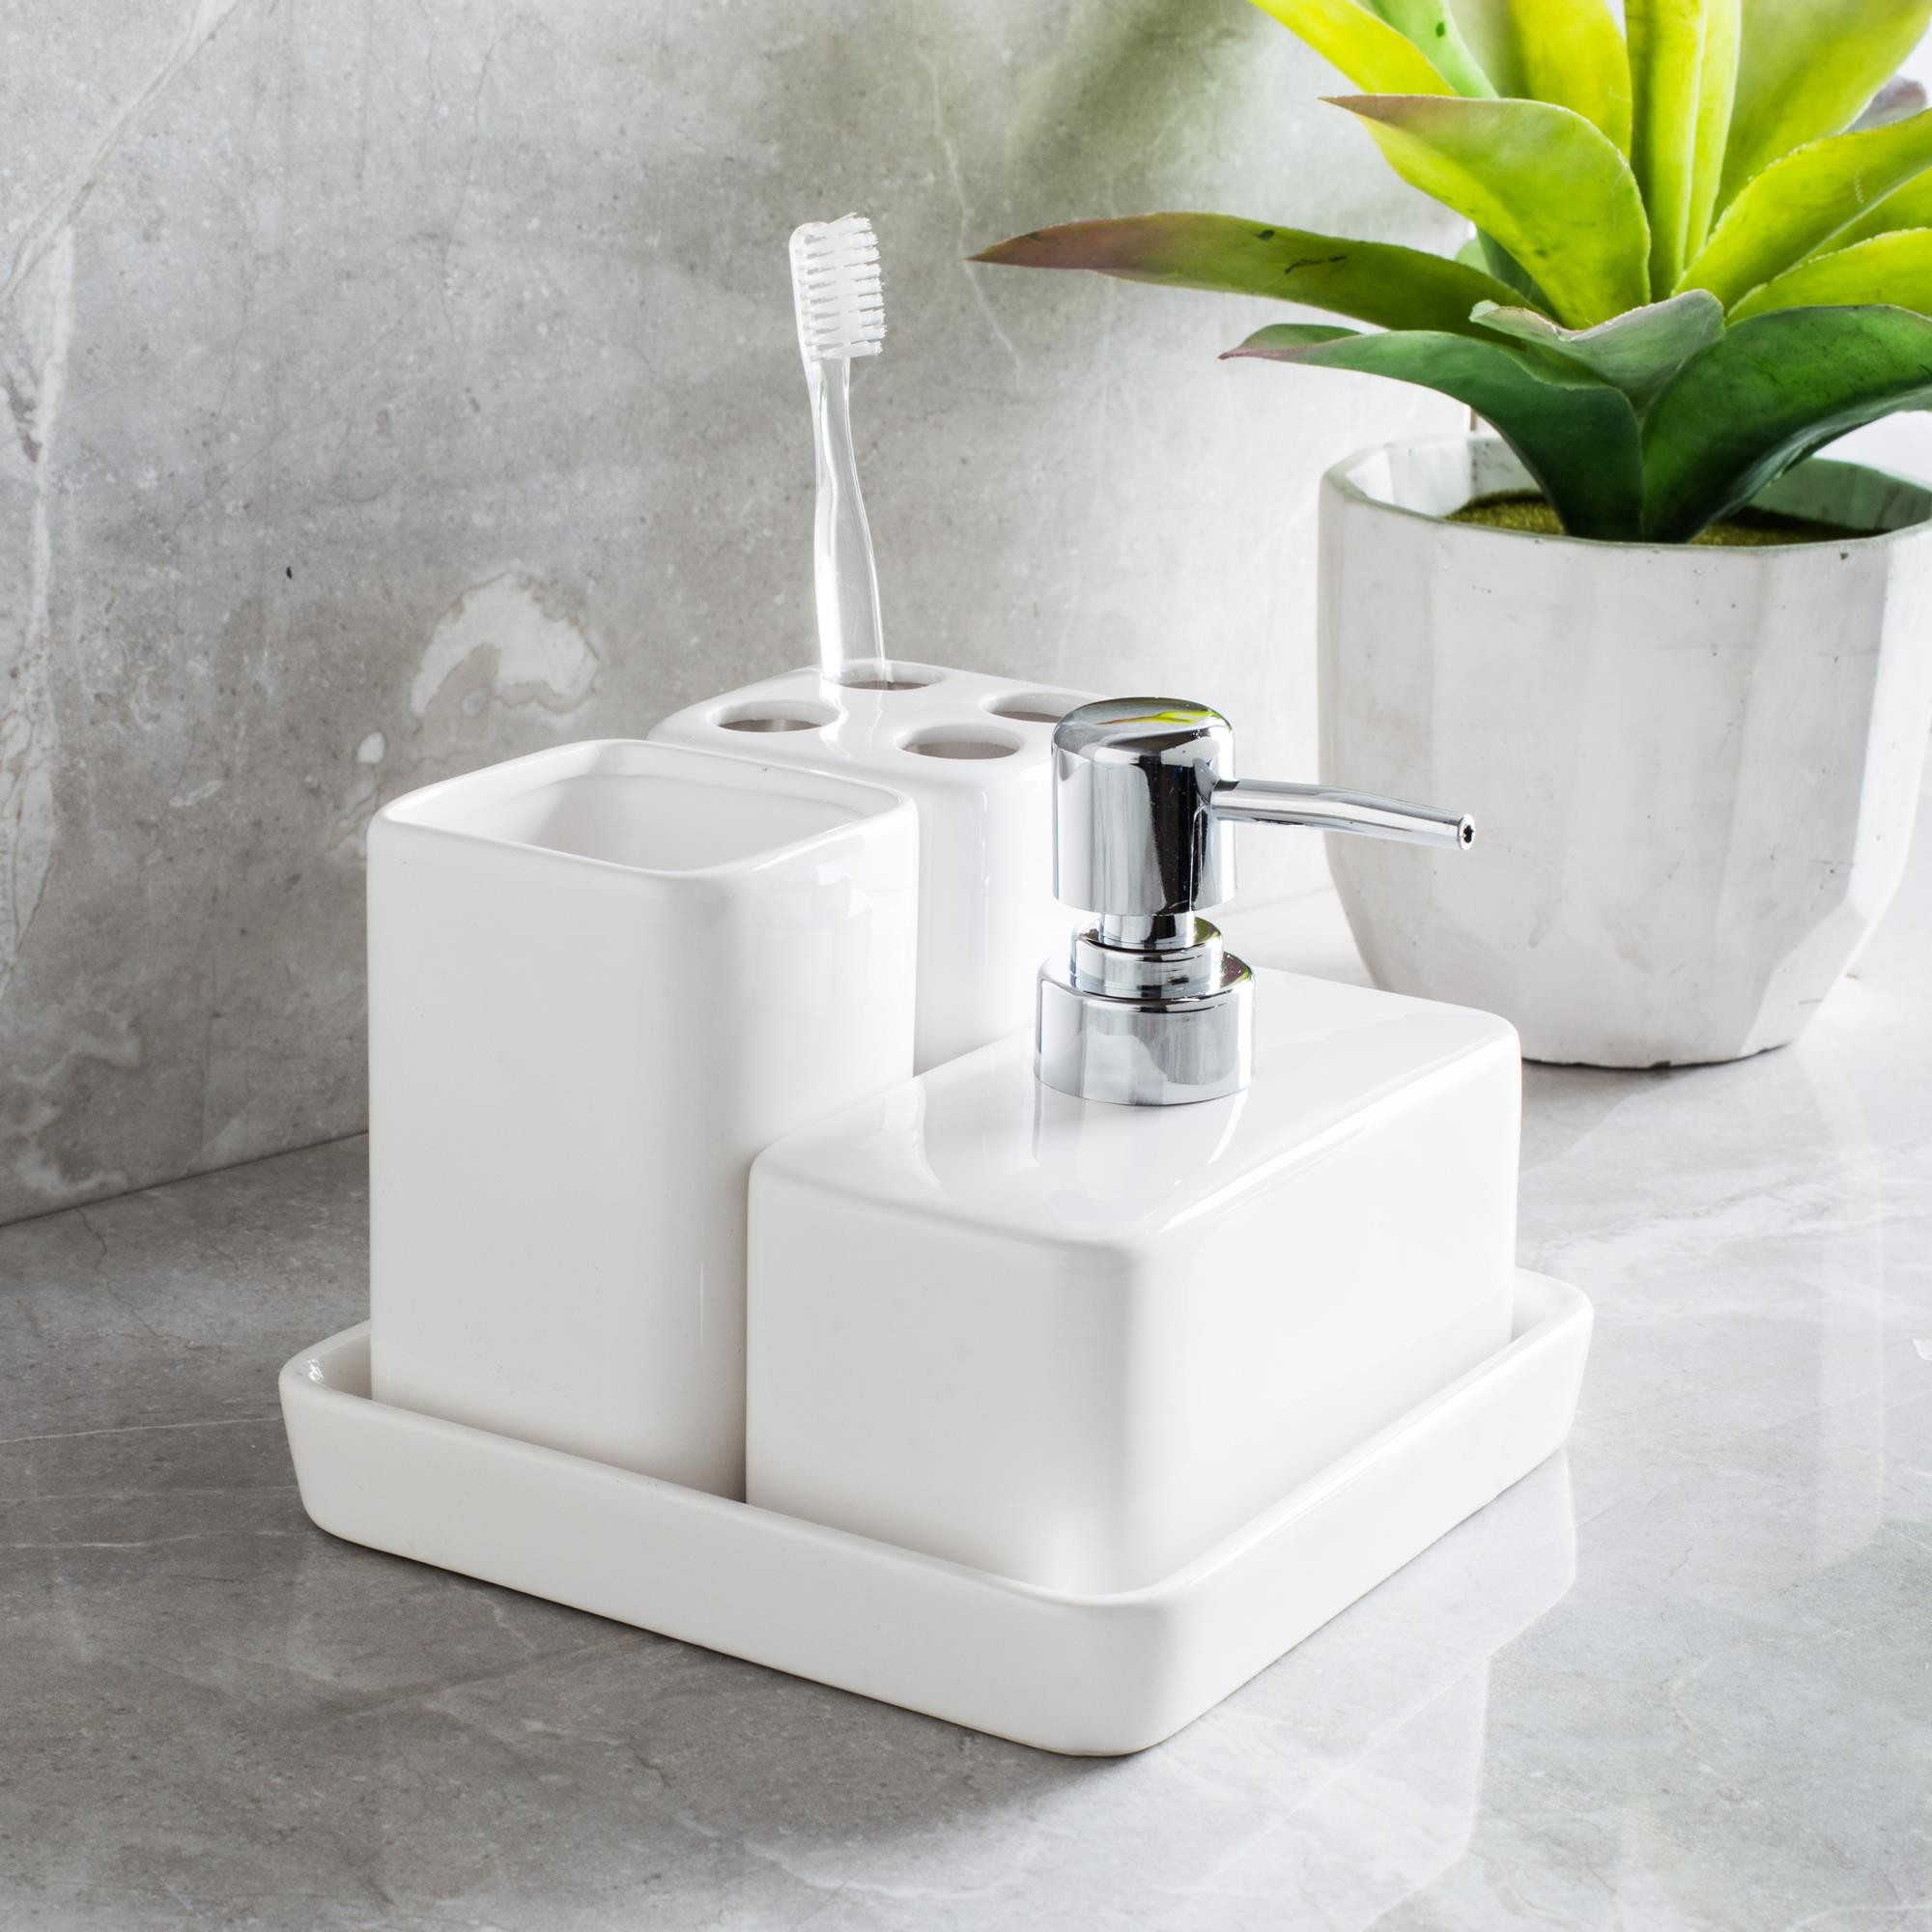 Kitchen And Bathroom Decor
 Harman Elements Bath Accessories White Set of 4